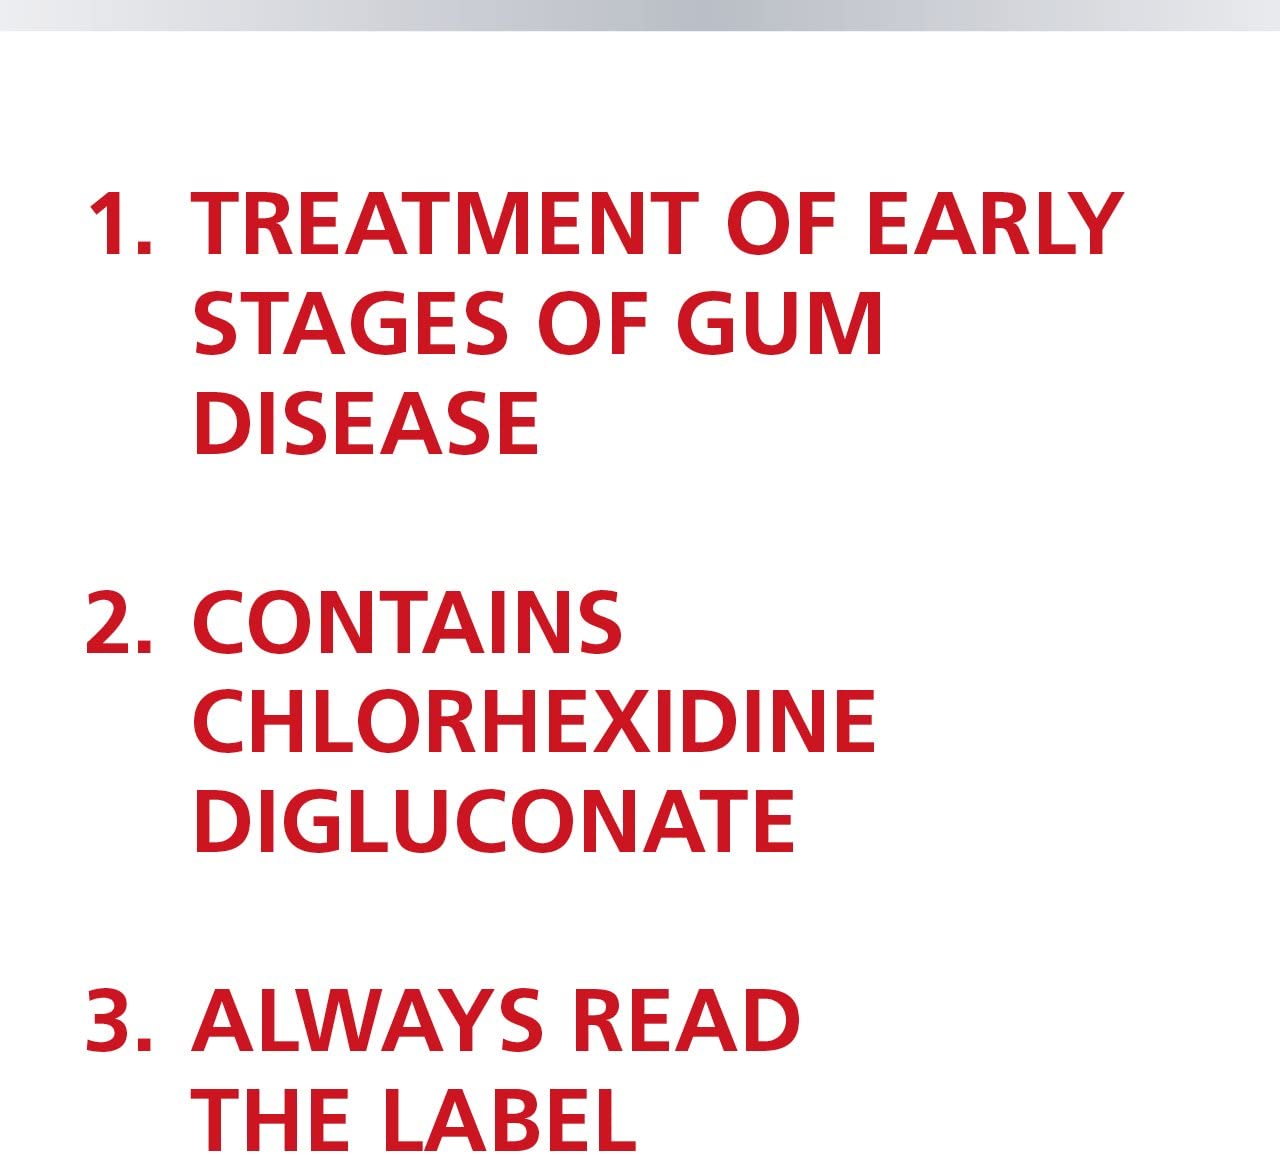 Corsodyl Gum Disease Treatment Mouthwash Chlorhexidine 0.2% Mint 600ml